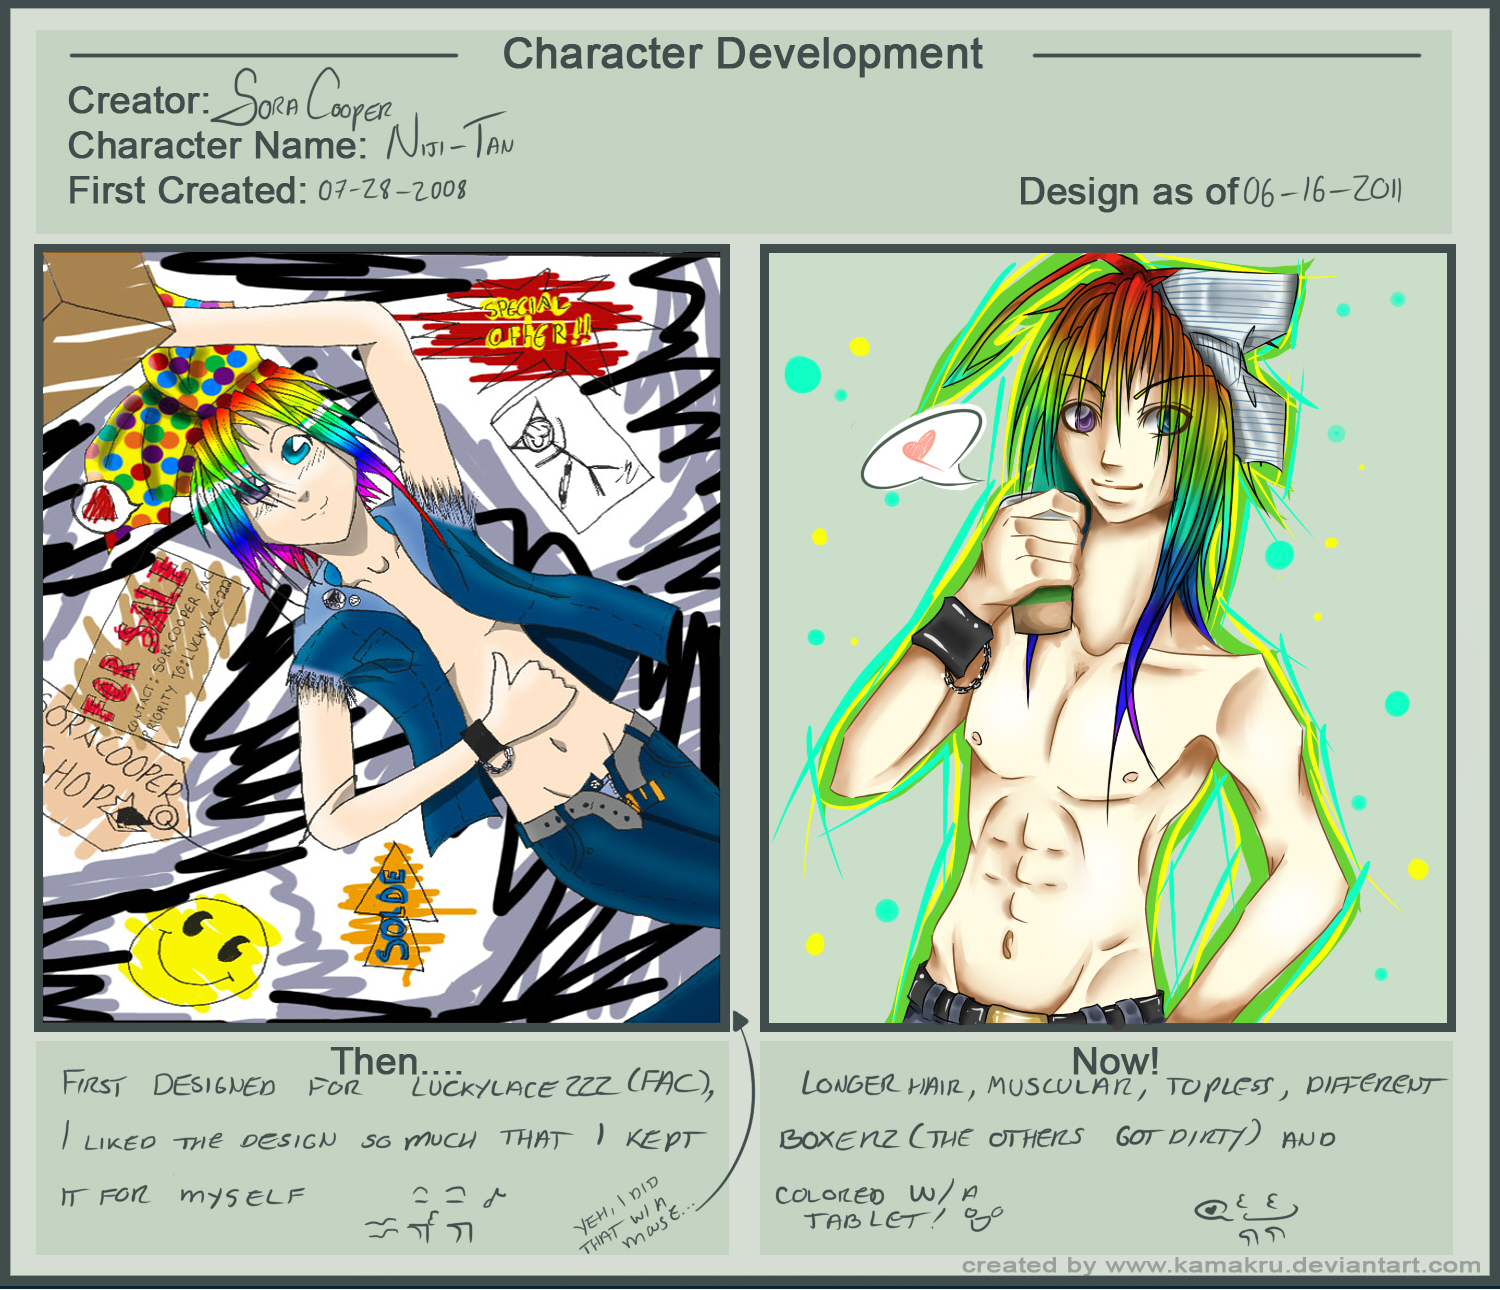 Character Developement Meme - Niji-tan by SoraCooper